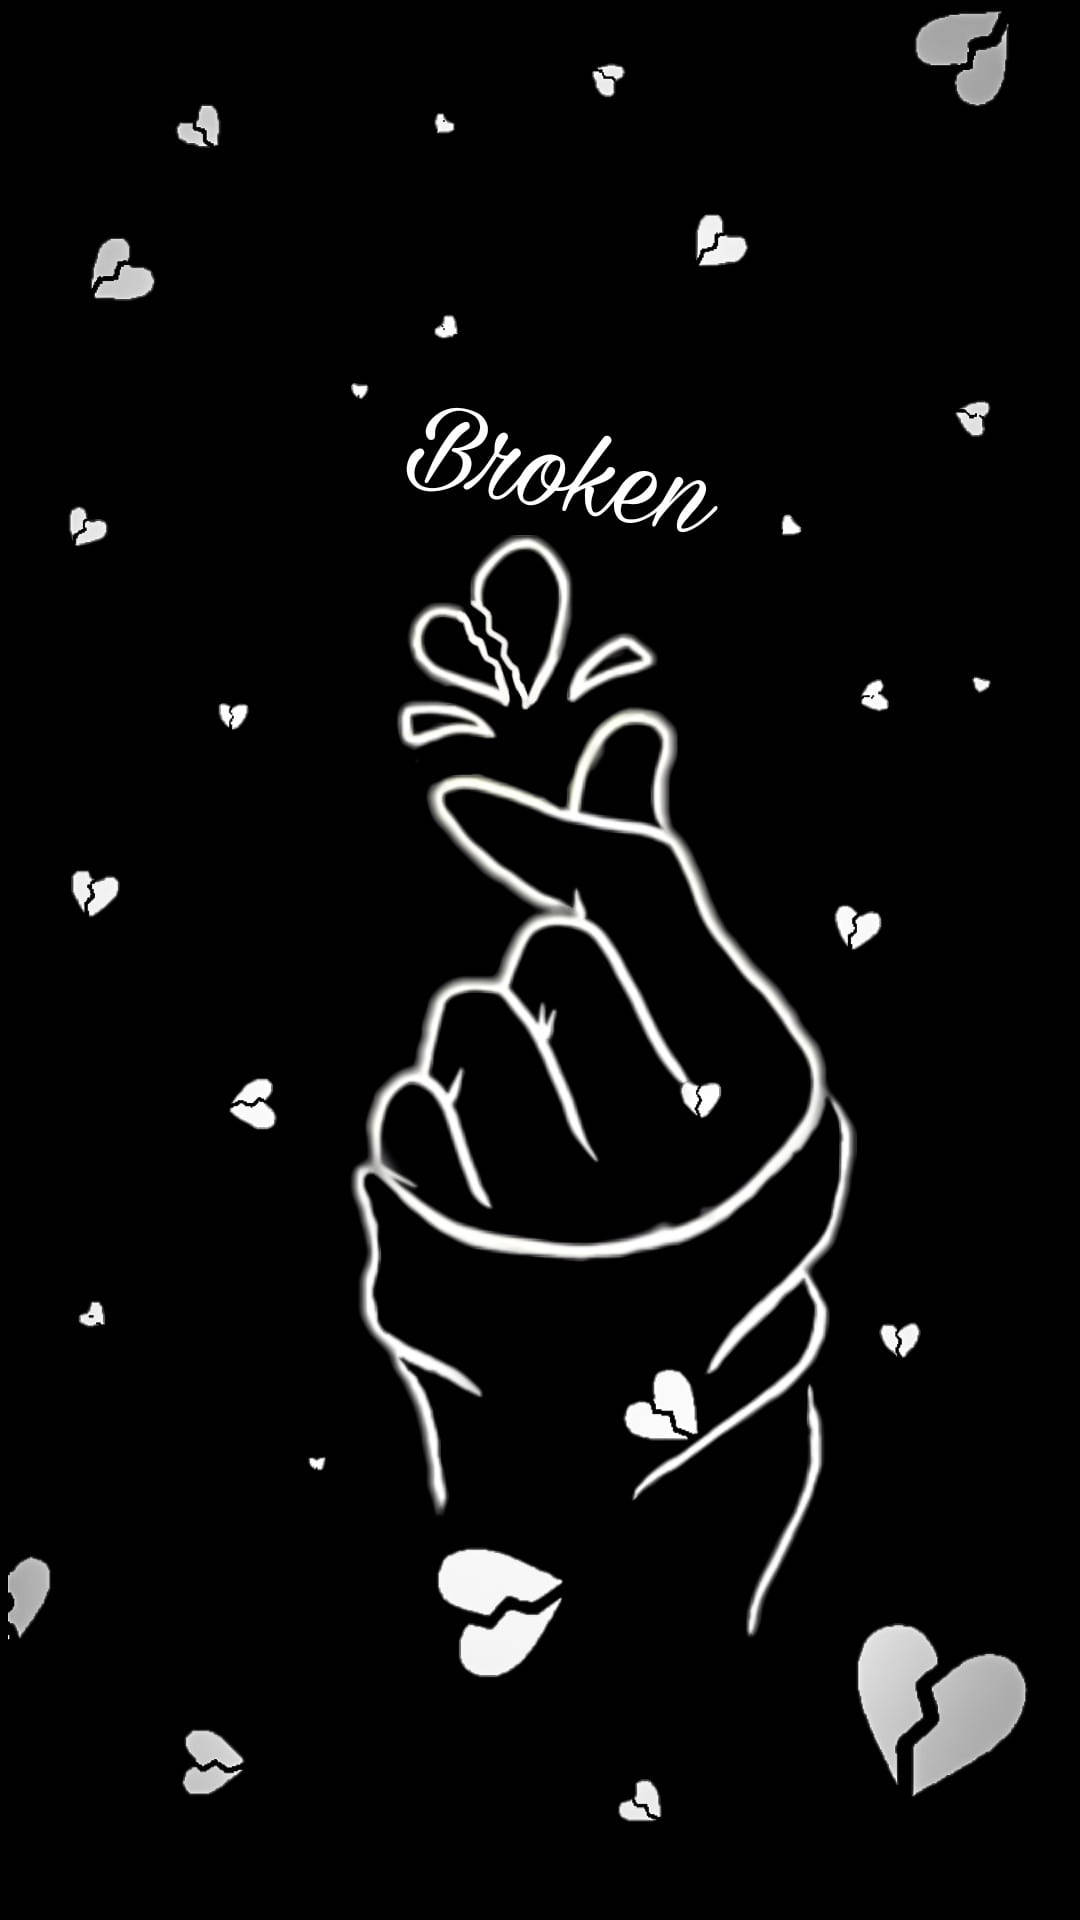 Free Broken Heart Black Wallpaper Downloads, [100+] Broken Heart Black  Wallpapers for FREE 